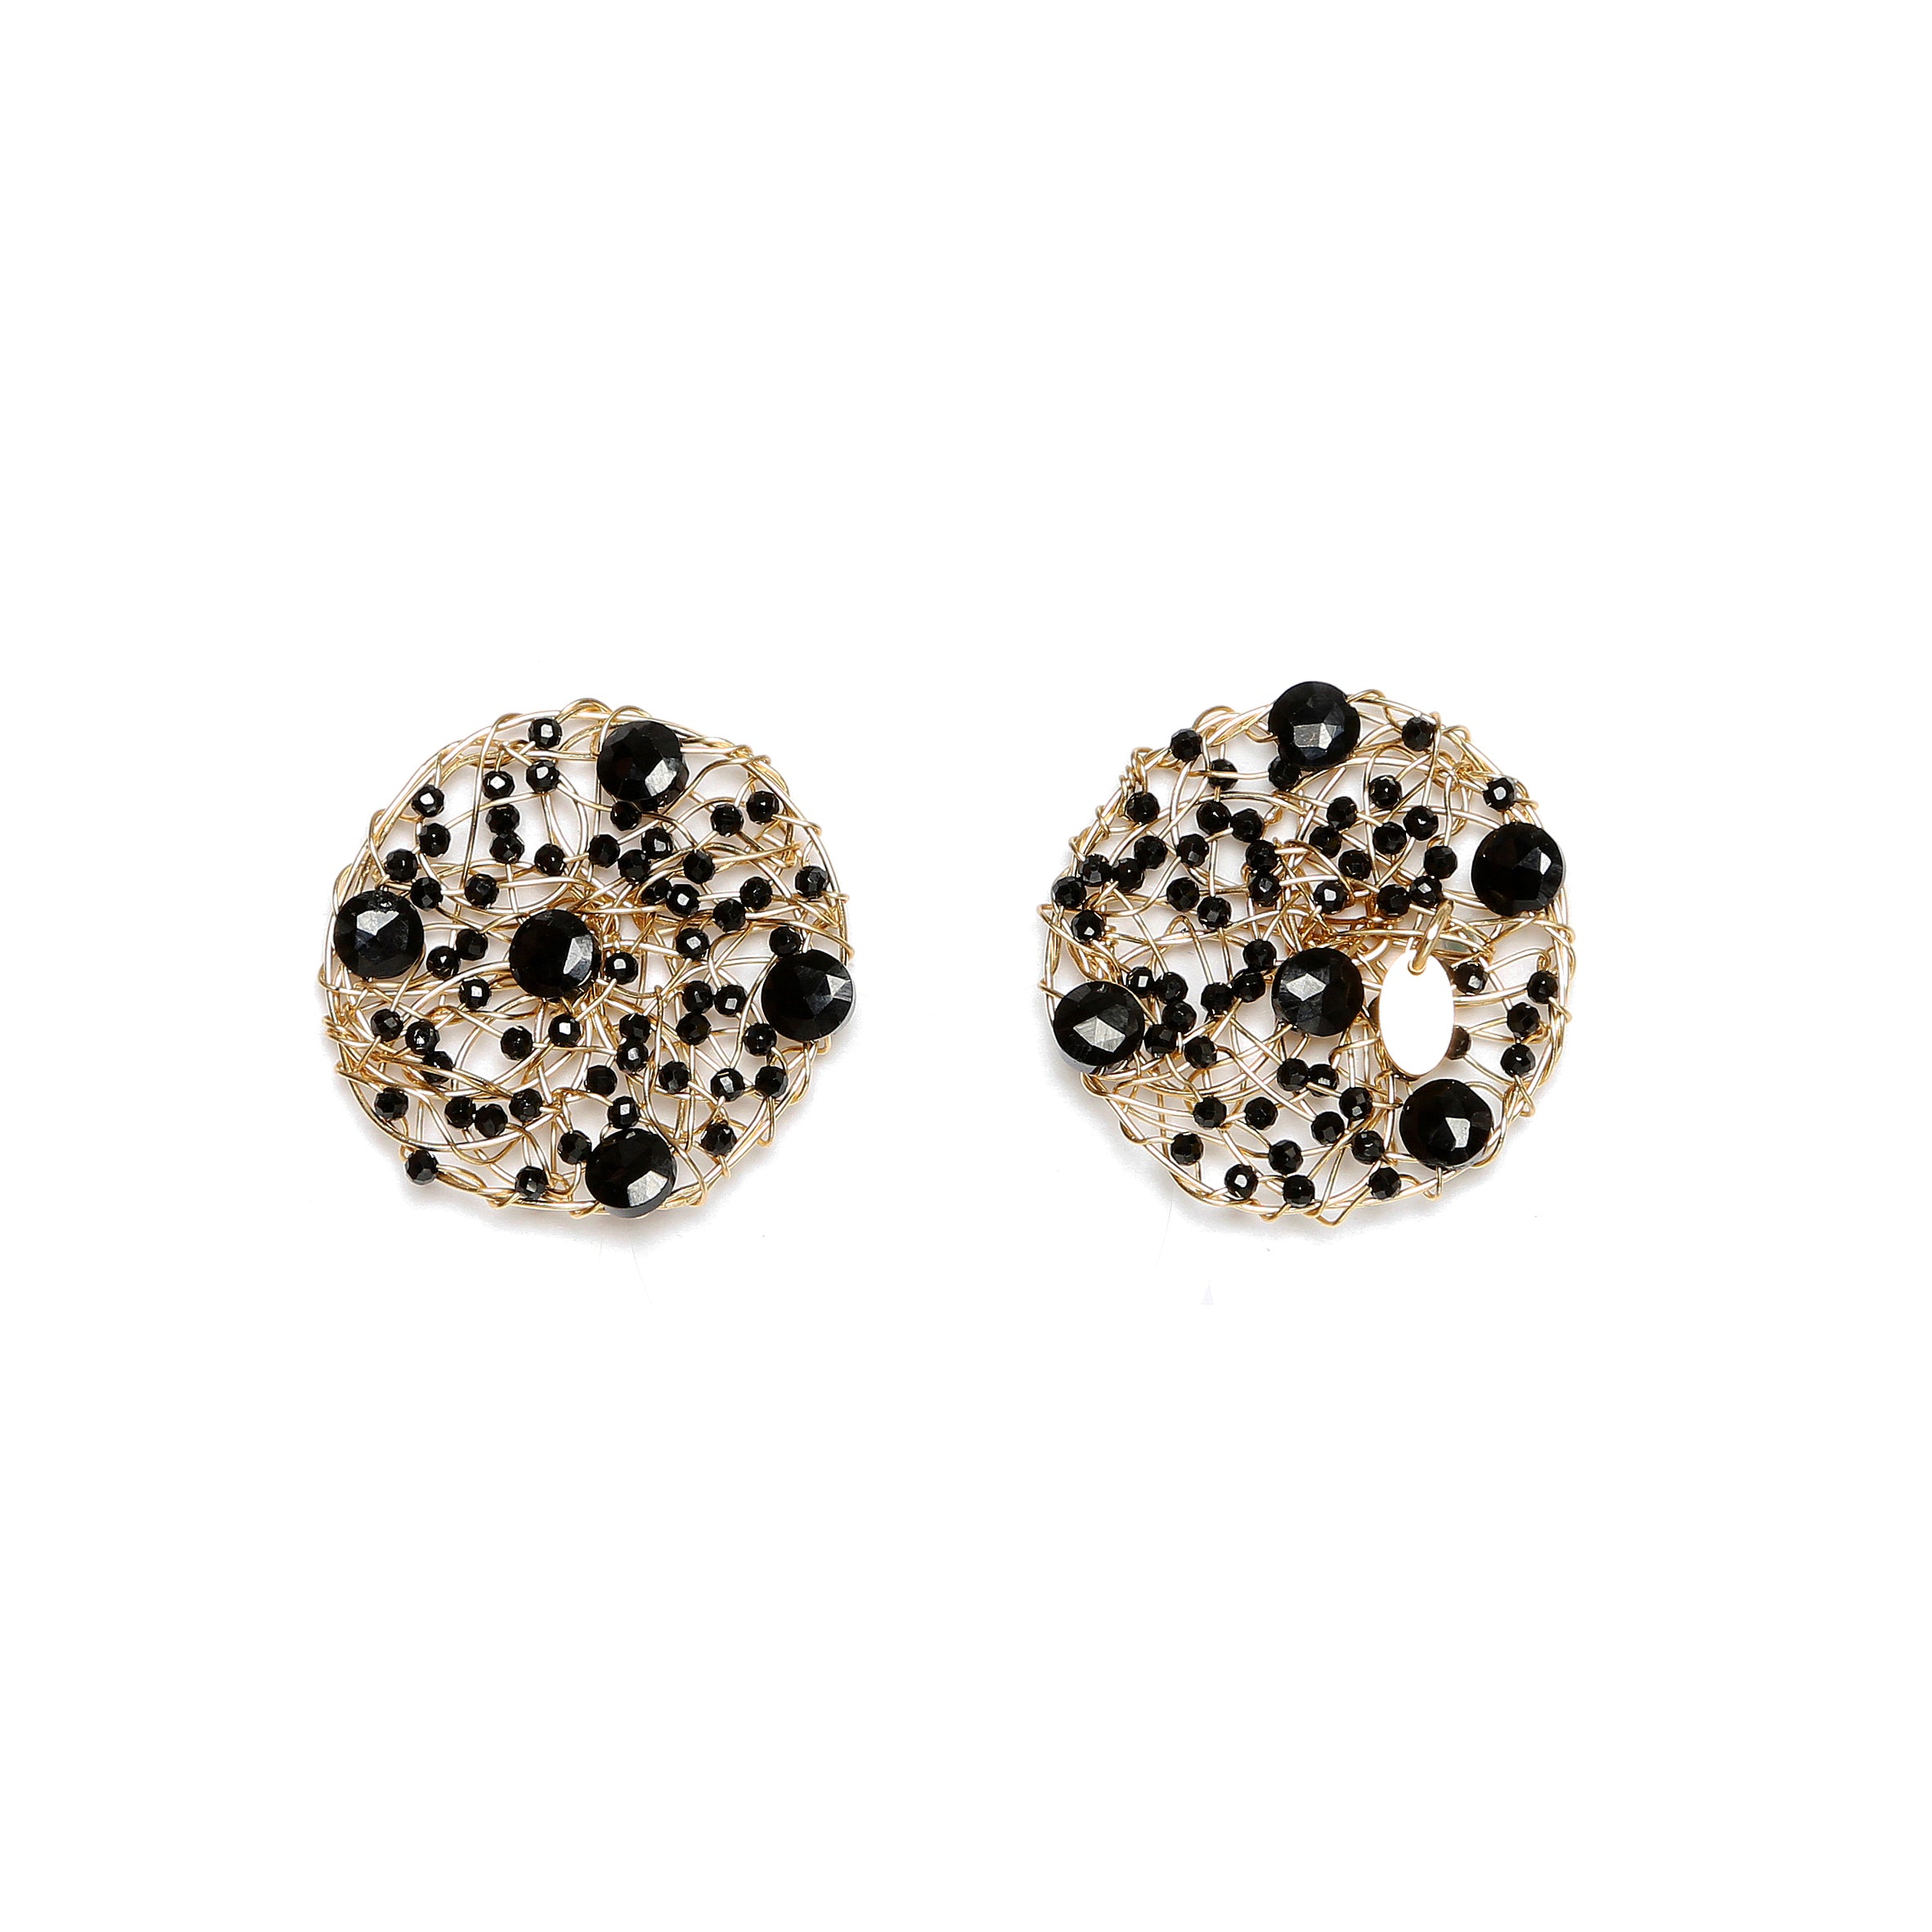 Aura Stud Earrings #1 (30mm) - Black Onyx & Black Spinel Earrings TARBAY   